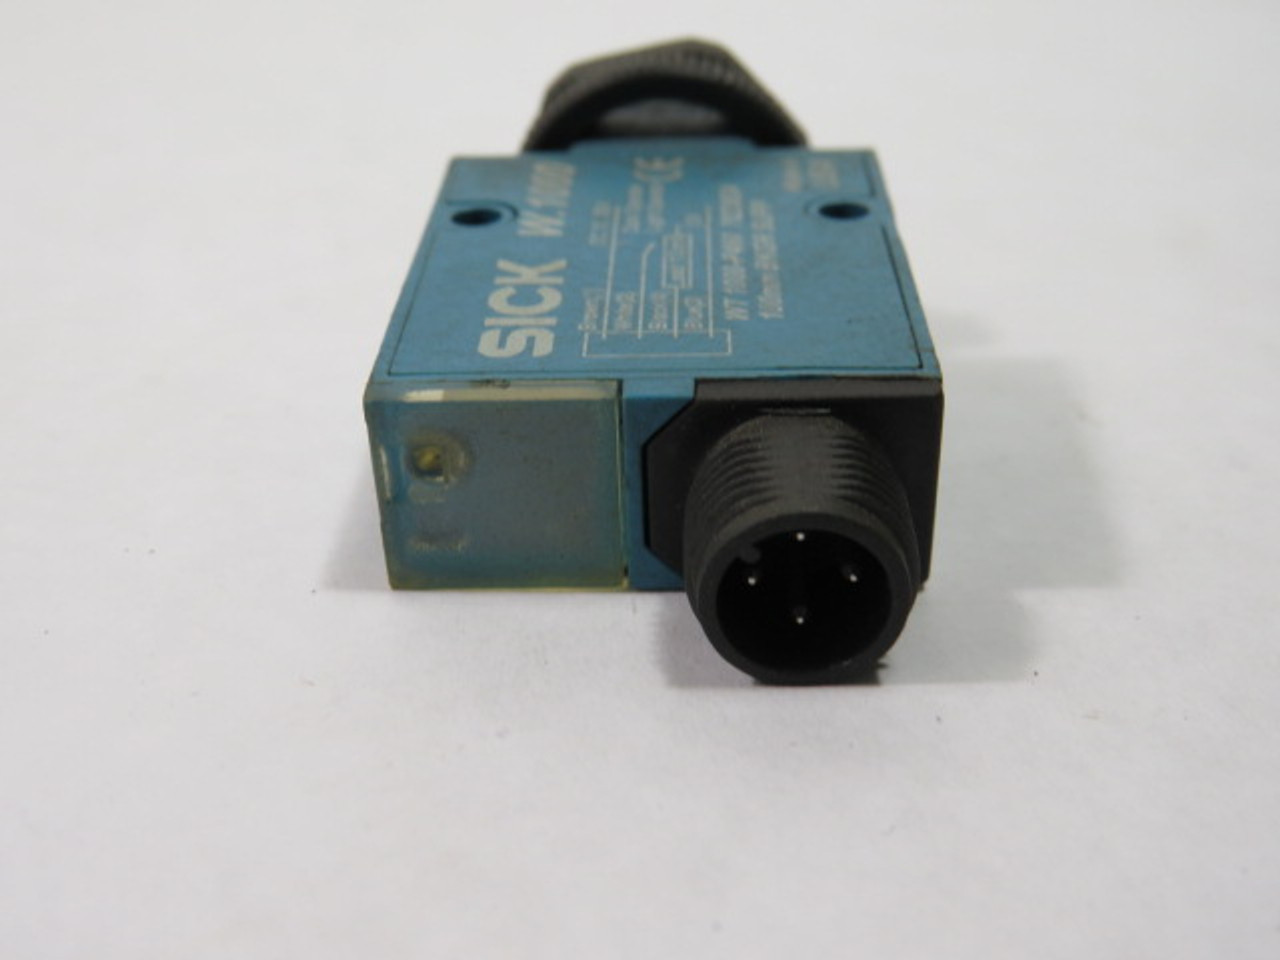 Sick WT-1000-P460 Photoelectric Sensor 100mm Range 10-30VDC USED